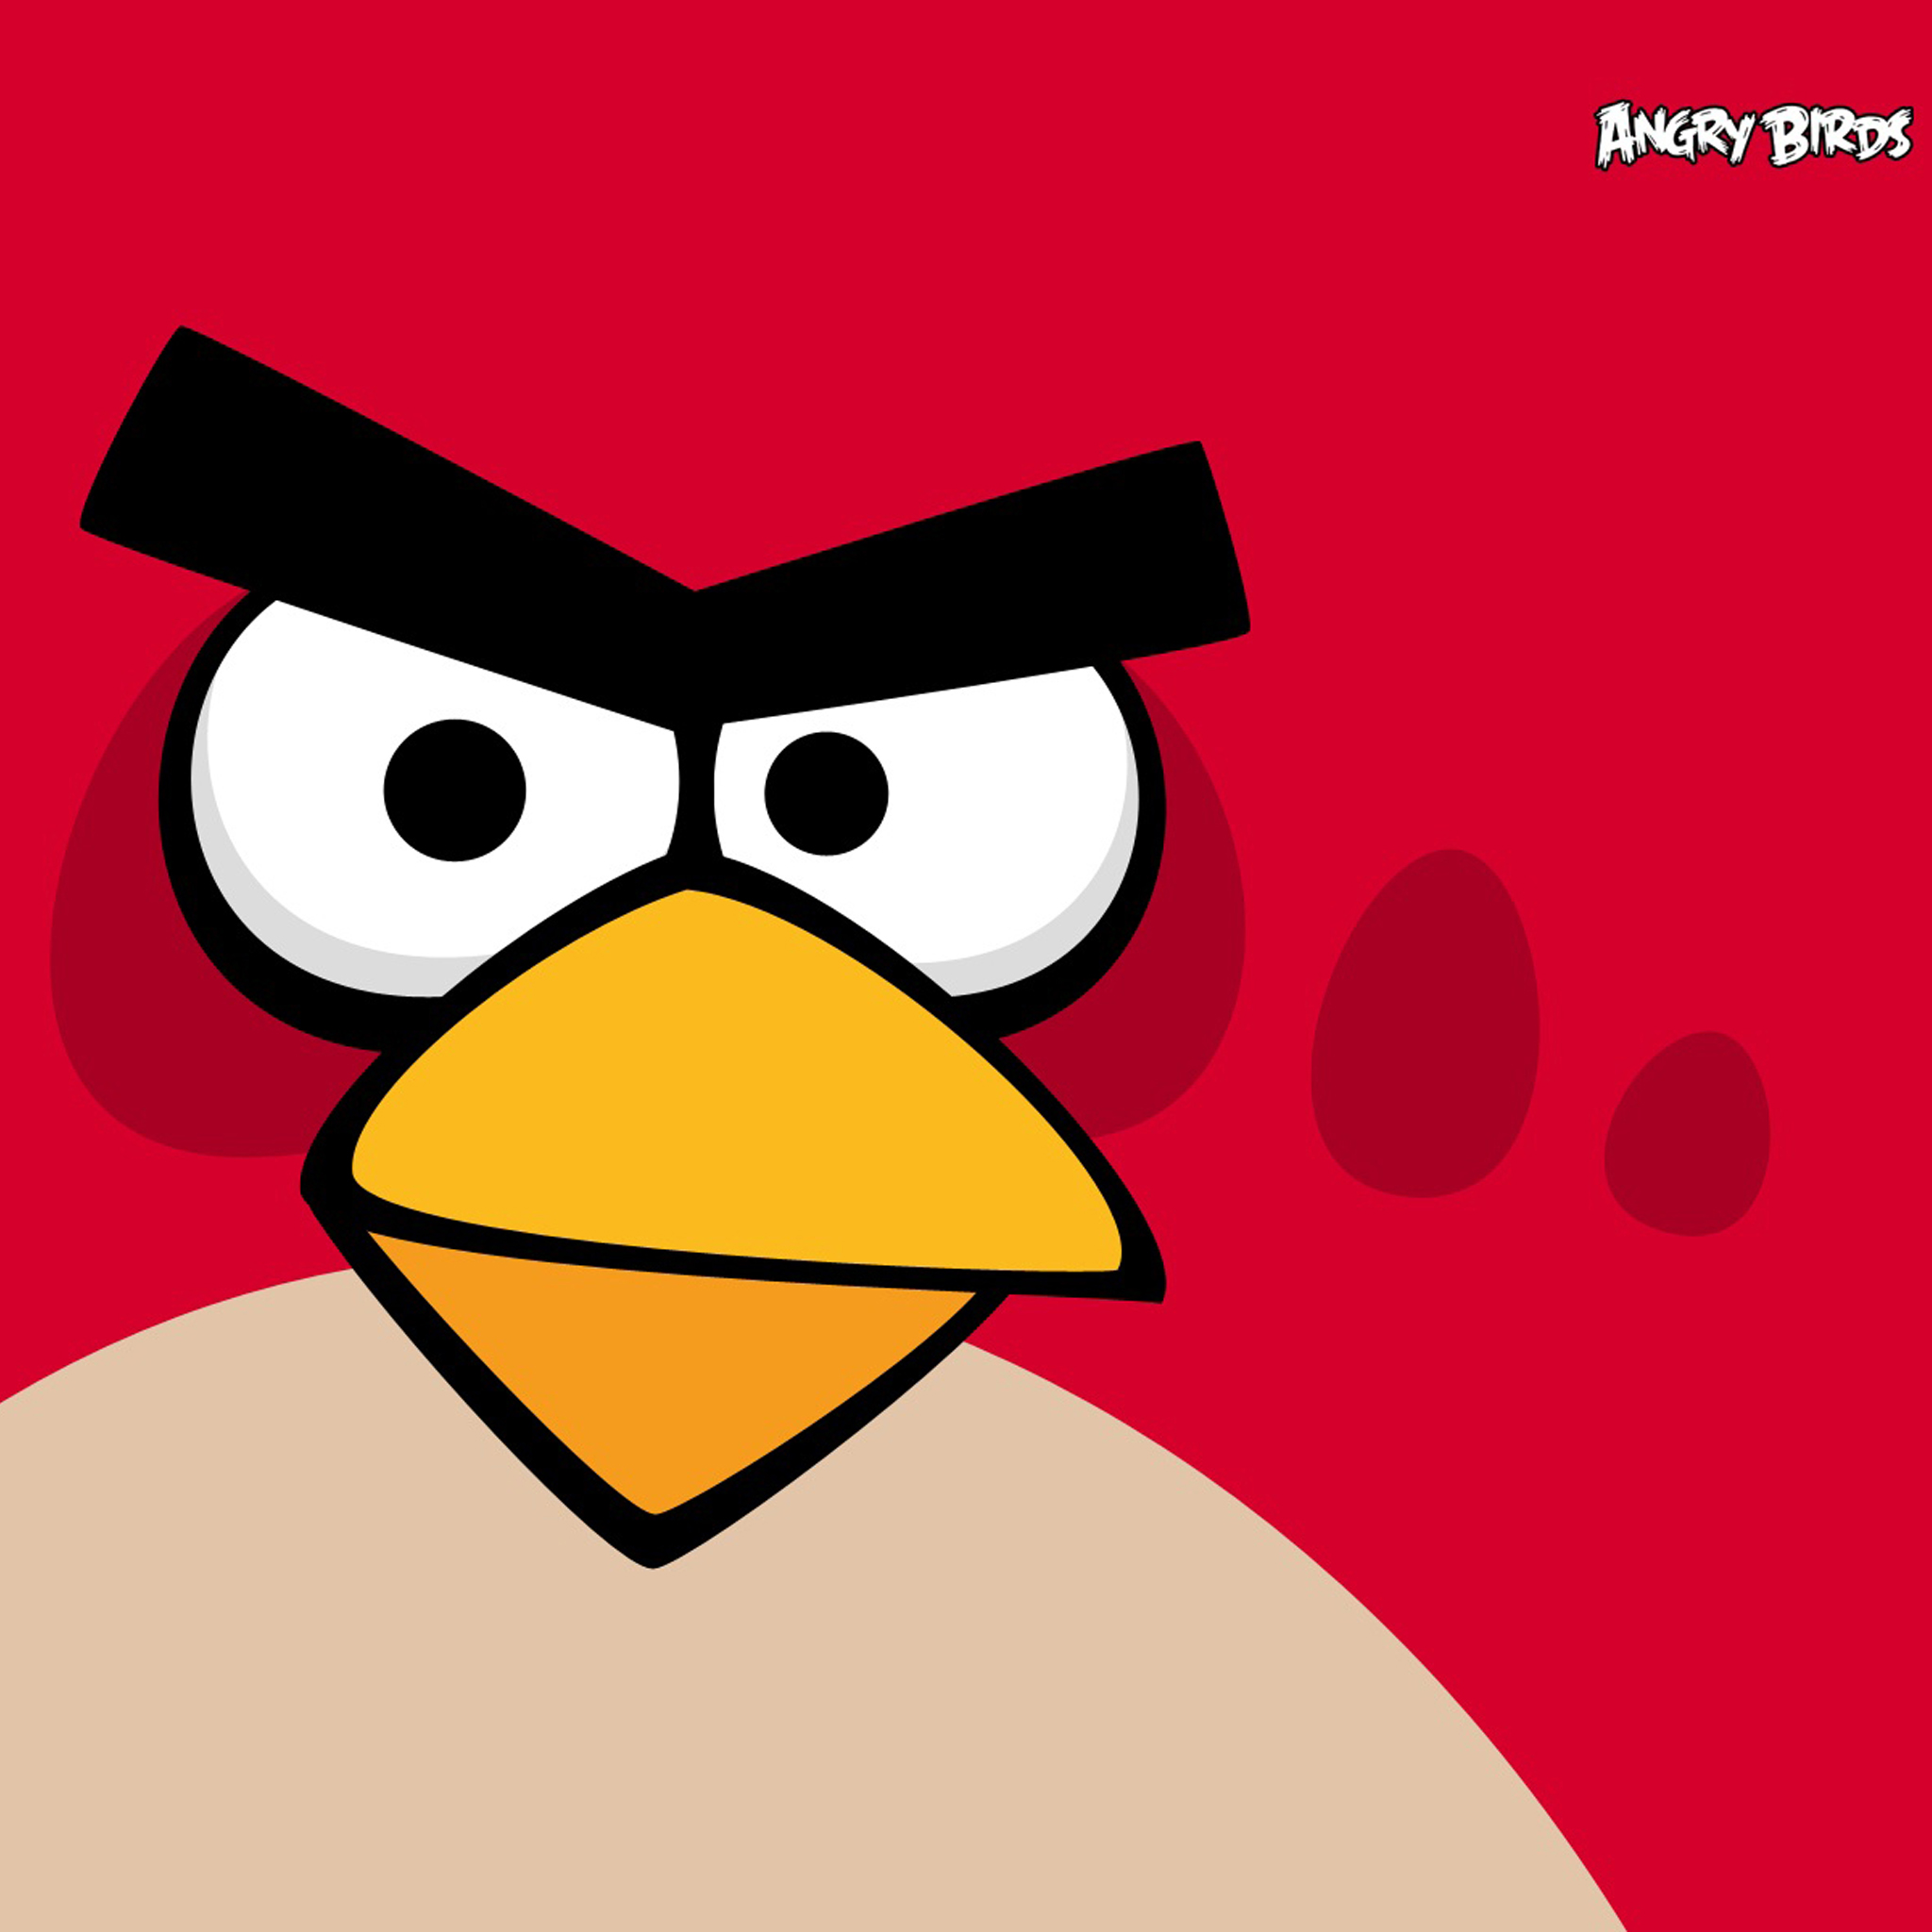 Angry Birds Wallpaper For Ipad 2048x2048 Pixel Wallpaper 9754